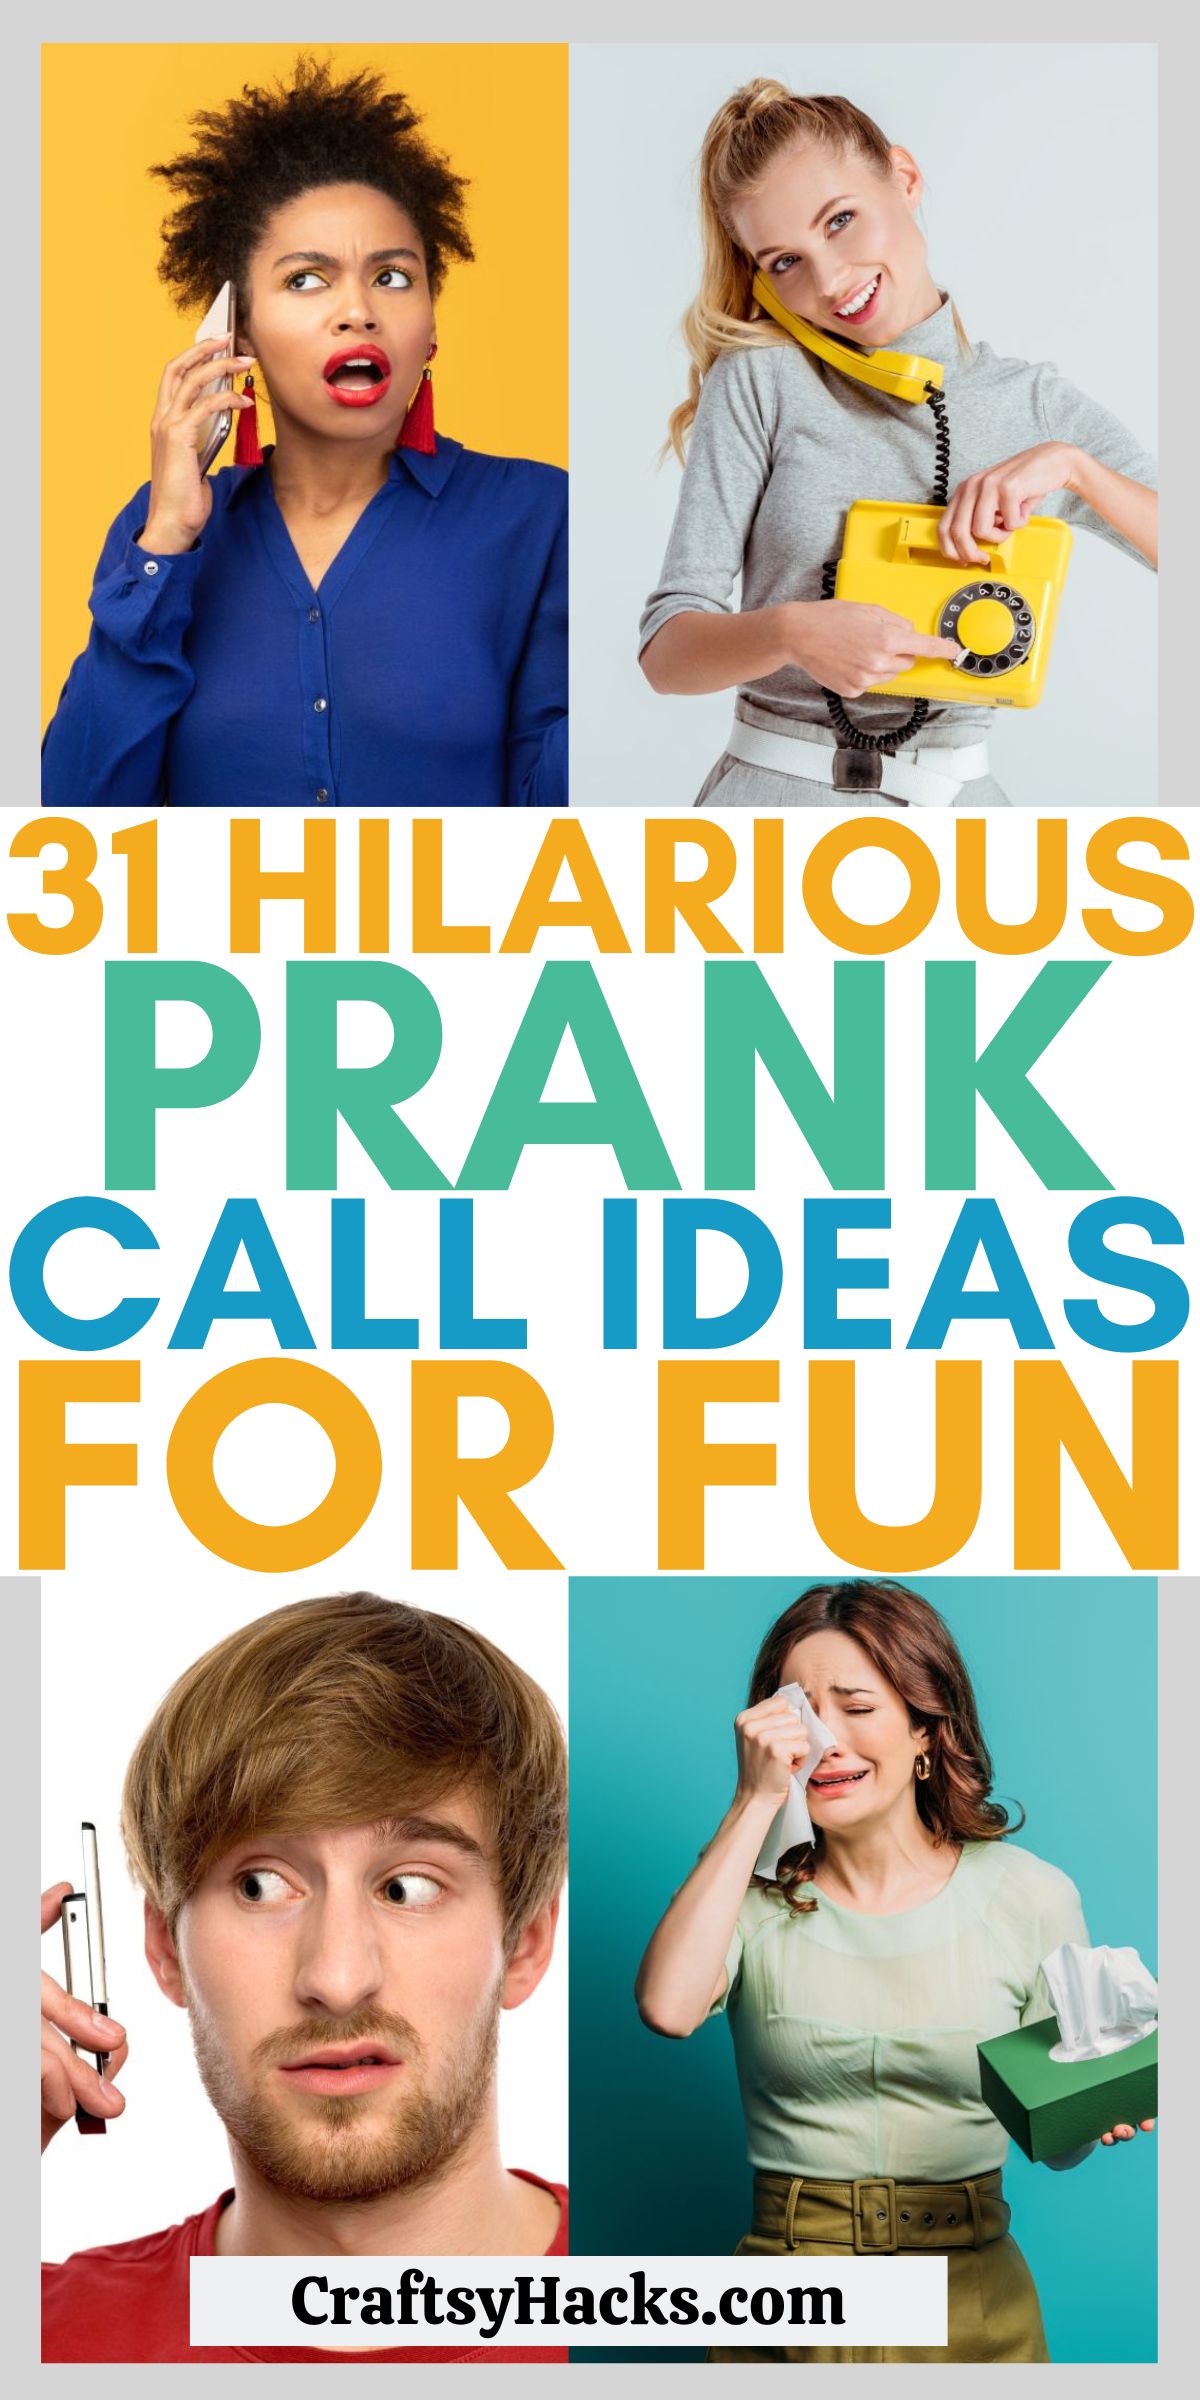 prank call ideas